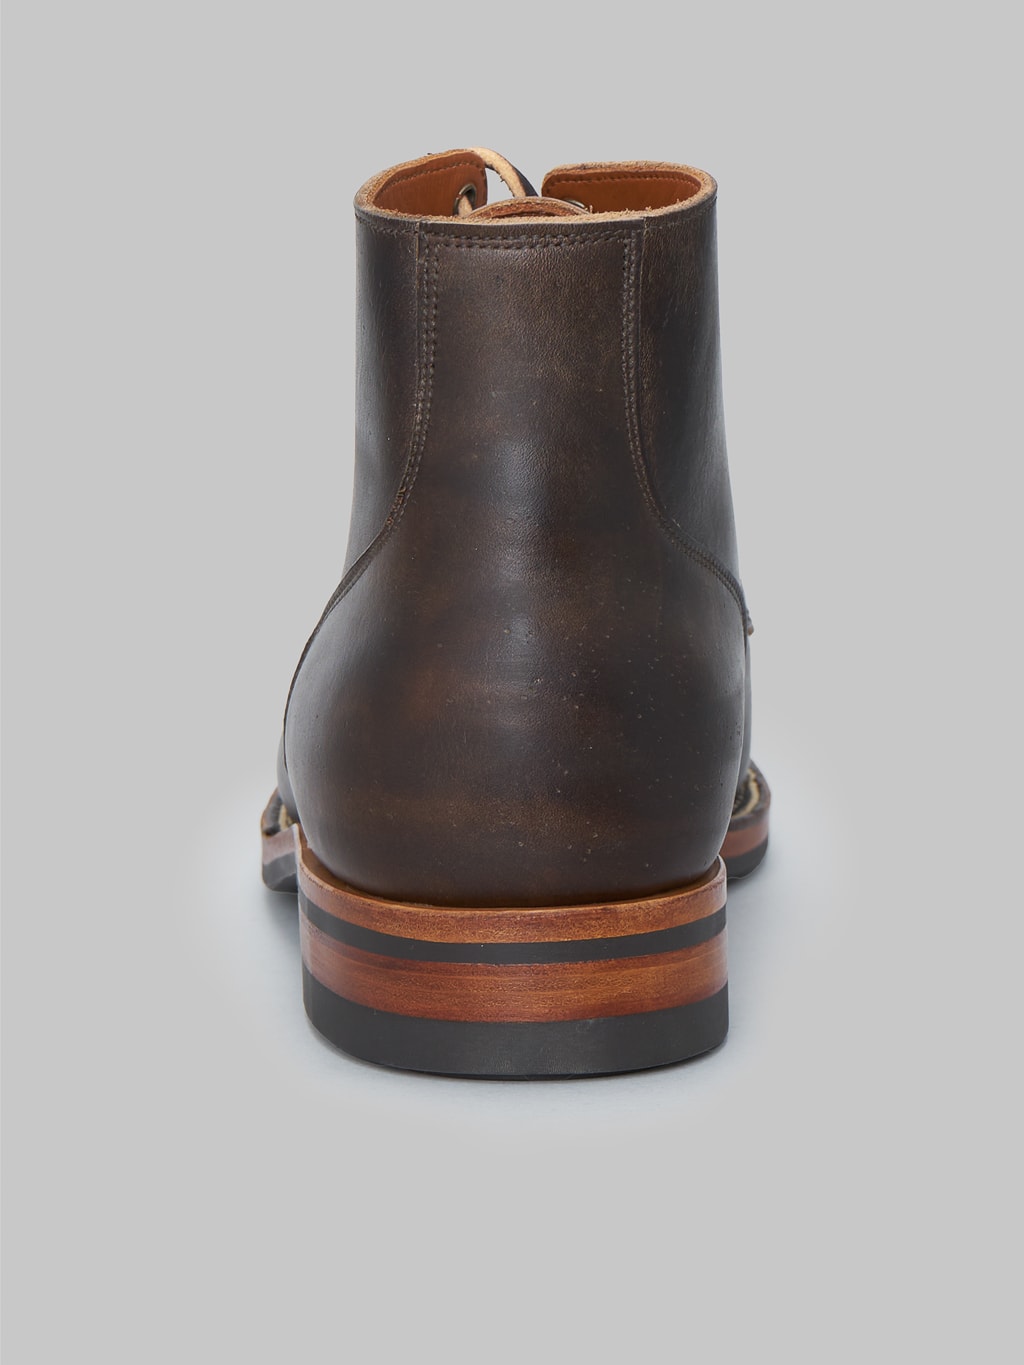 viberg service boot 2023 bct antique phoenix dark brown leather heel